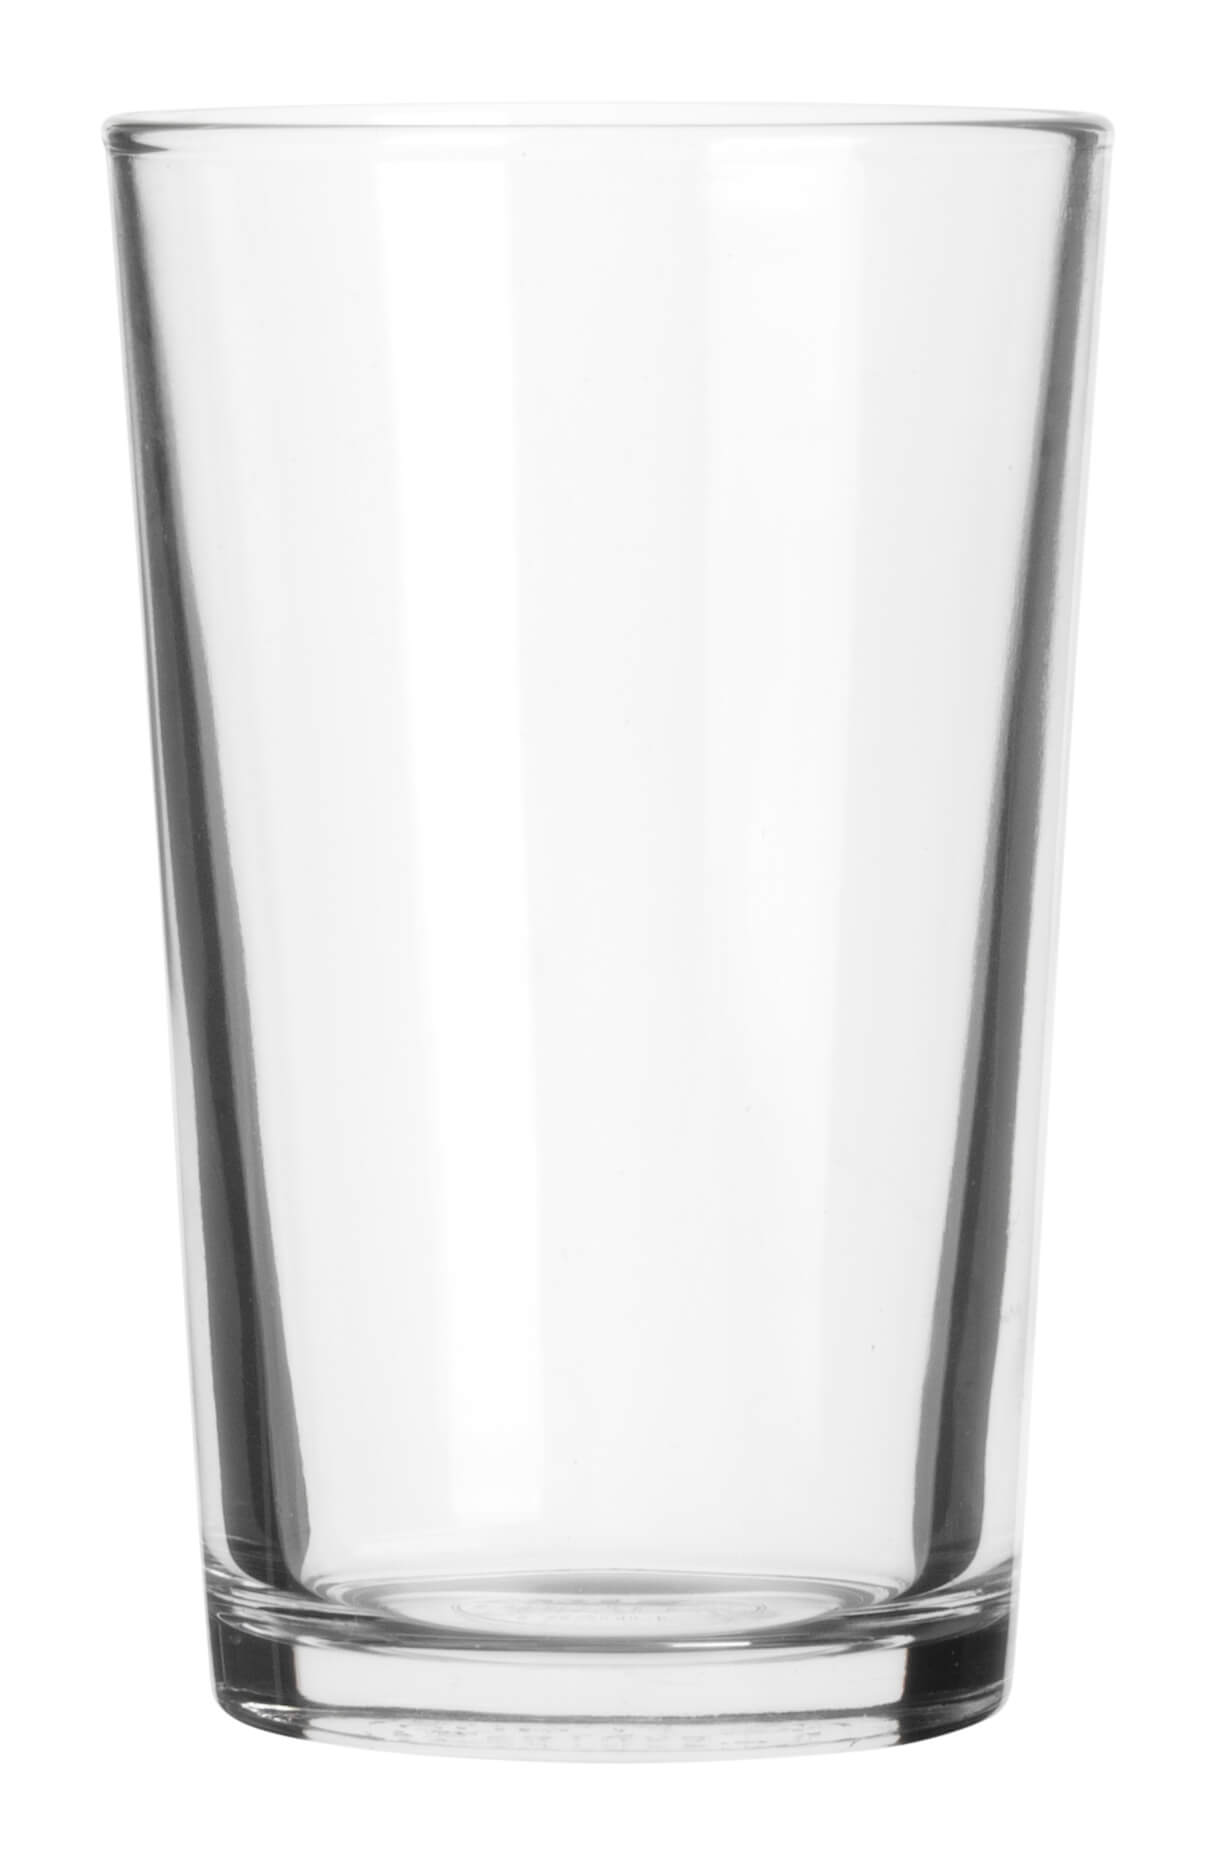 Water glass Chope Unie, Duralex - 200ml (1 pc.)